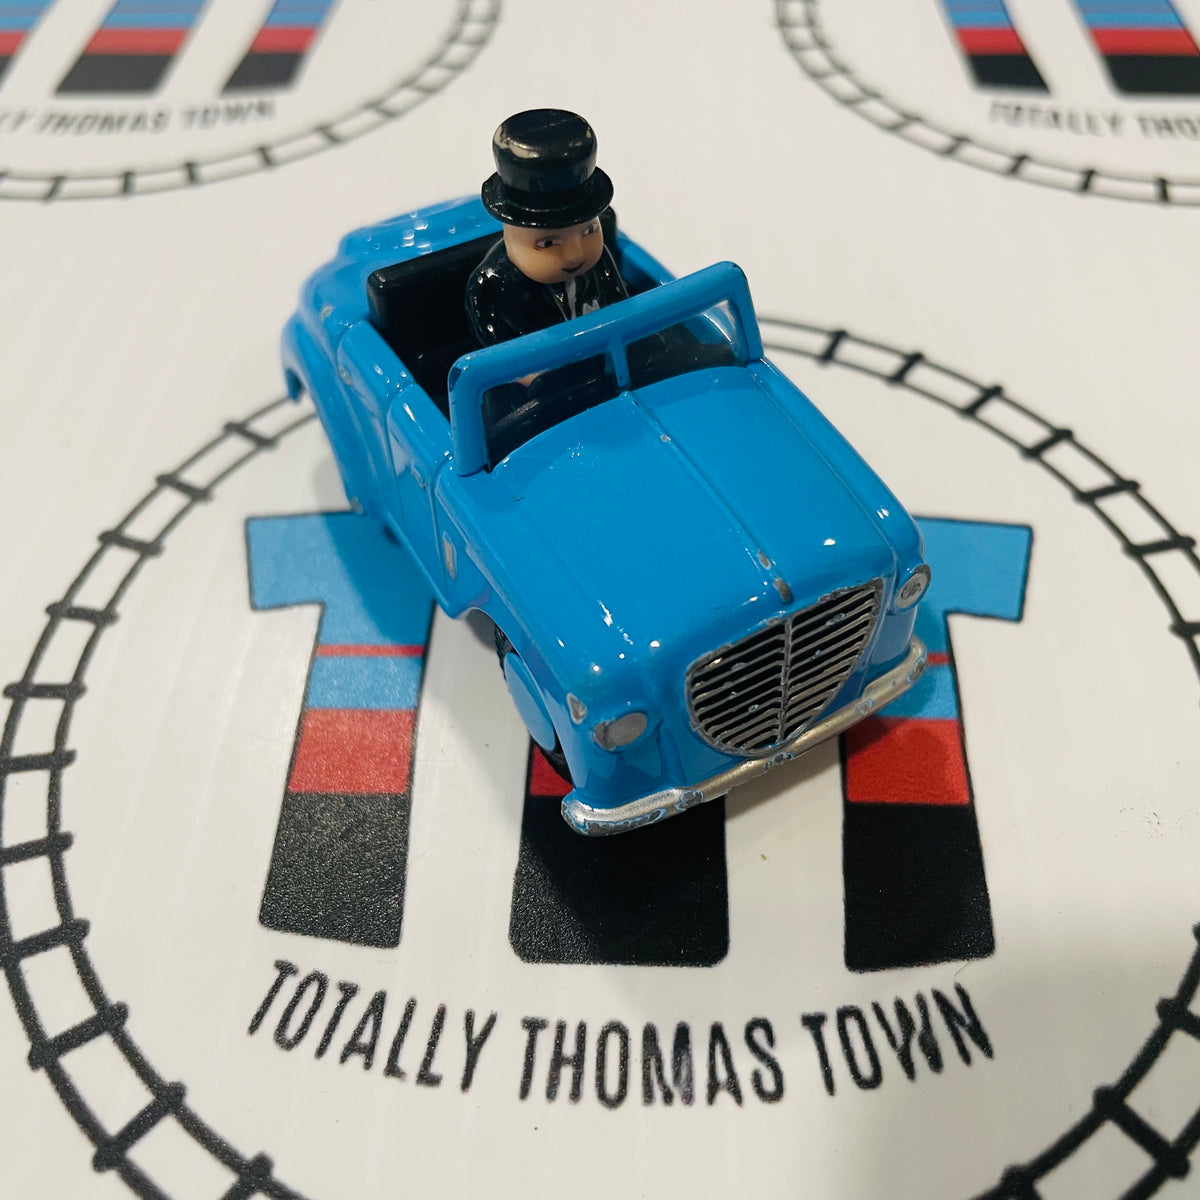 Sir Topham Hatts Car 2009 Fair Condition Used Take N Play Totally Thomas Town